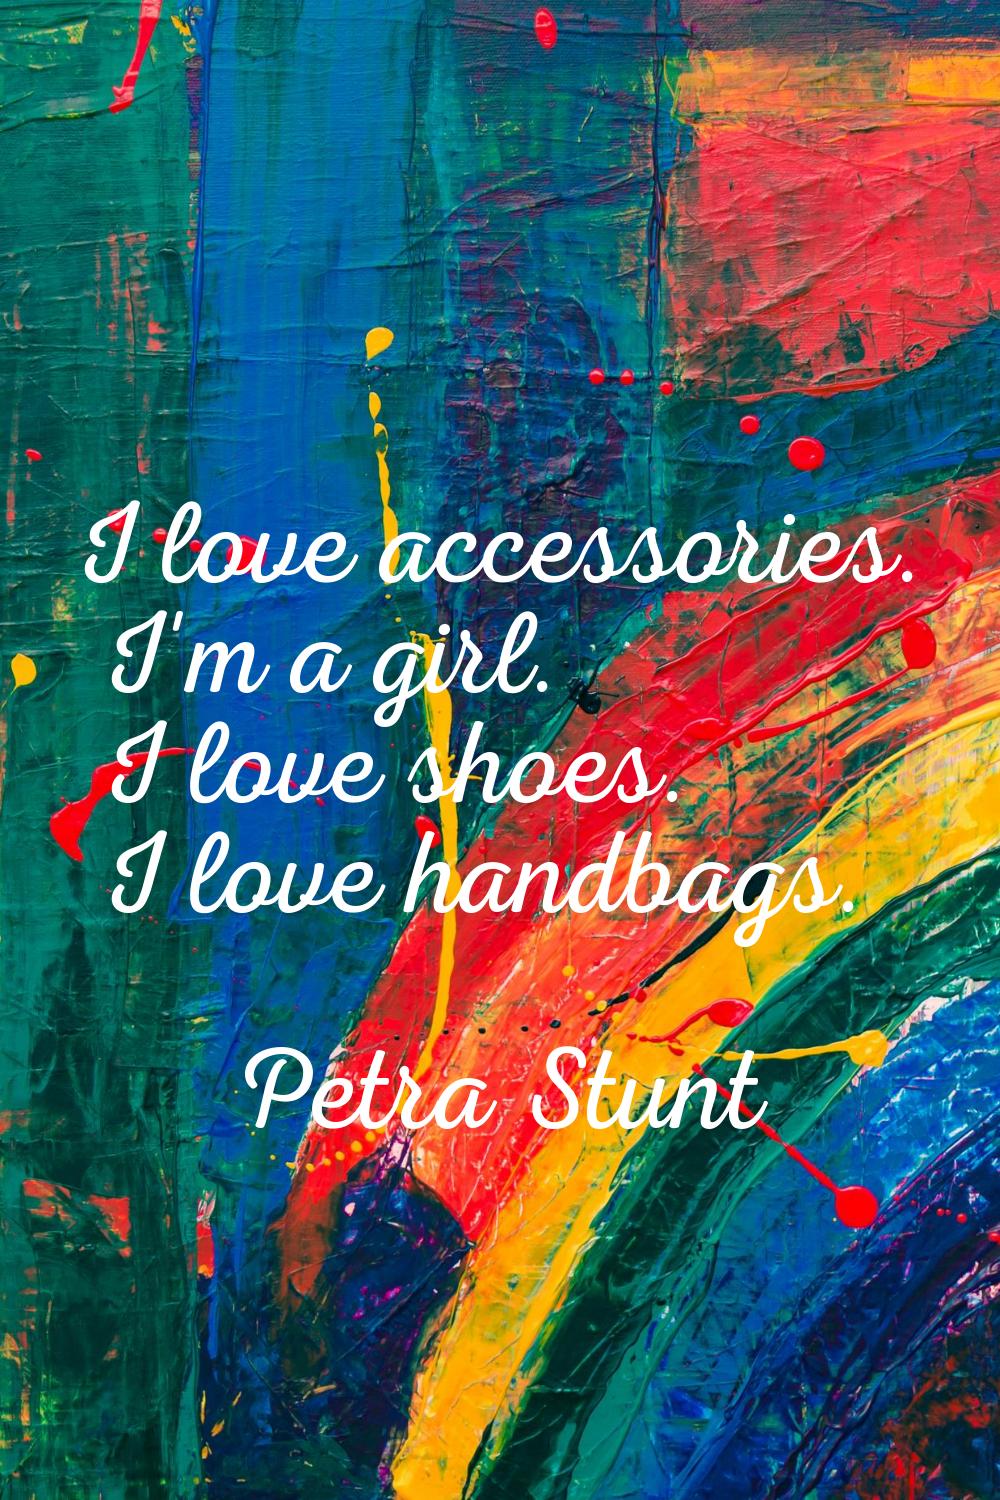 I love accessories. I'm a girl. I love shoes. I love handbags.